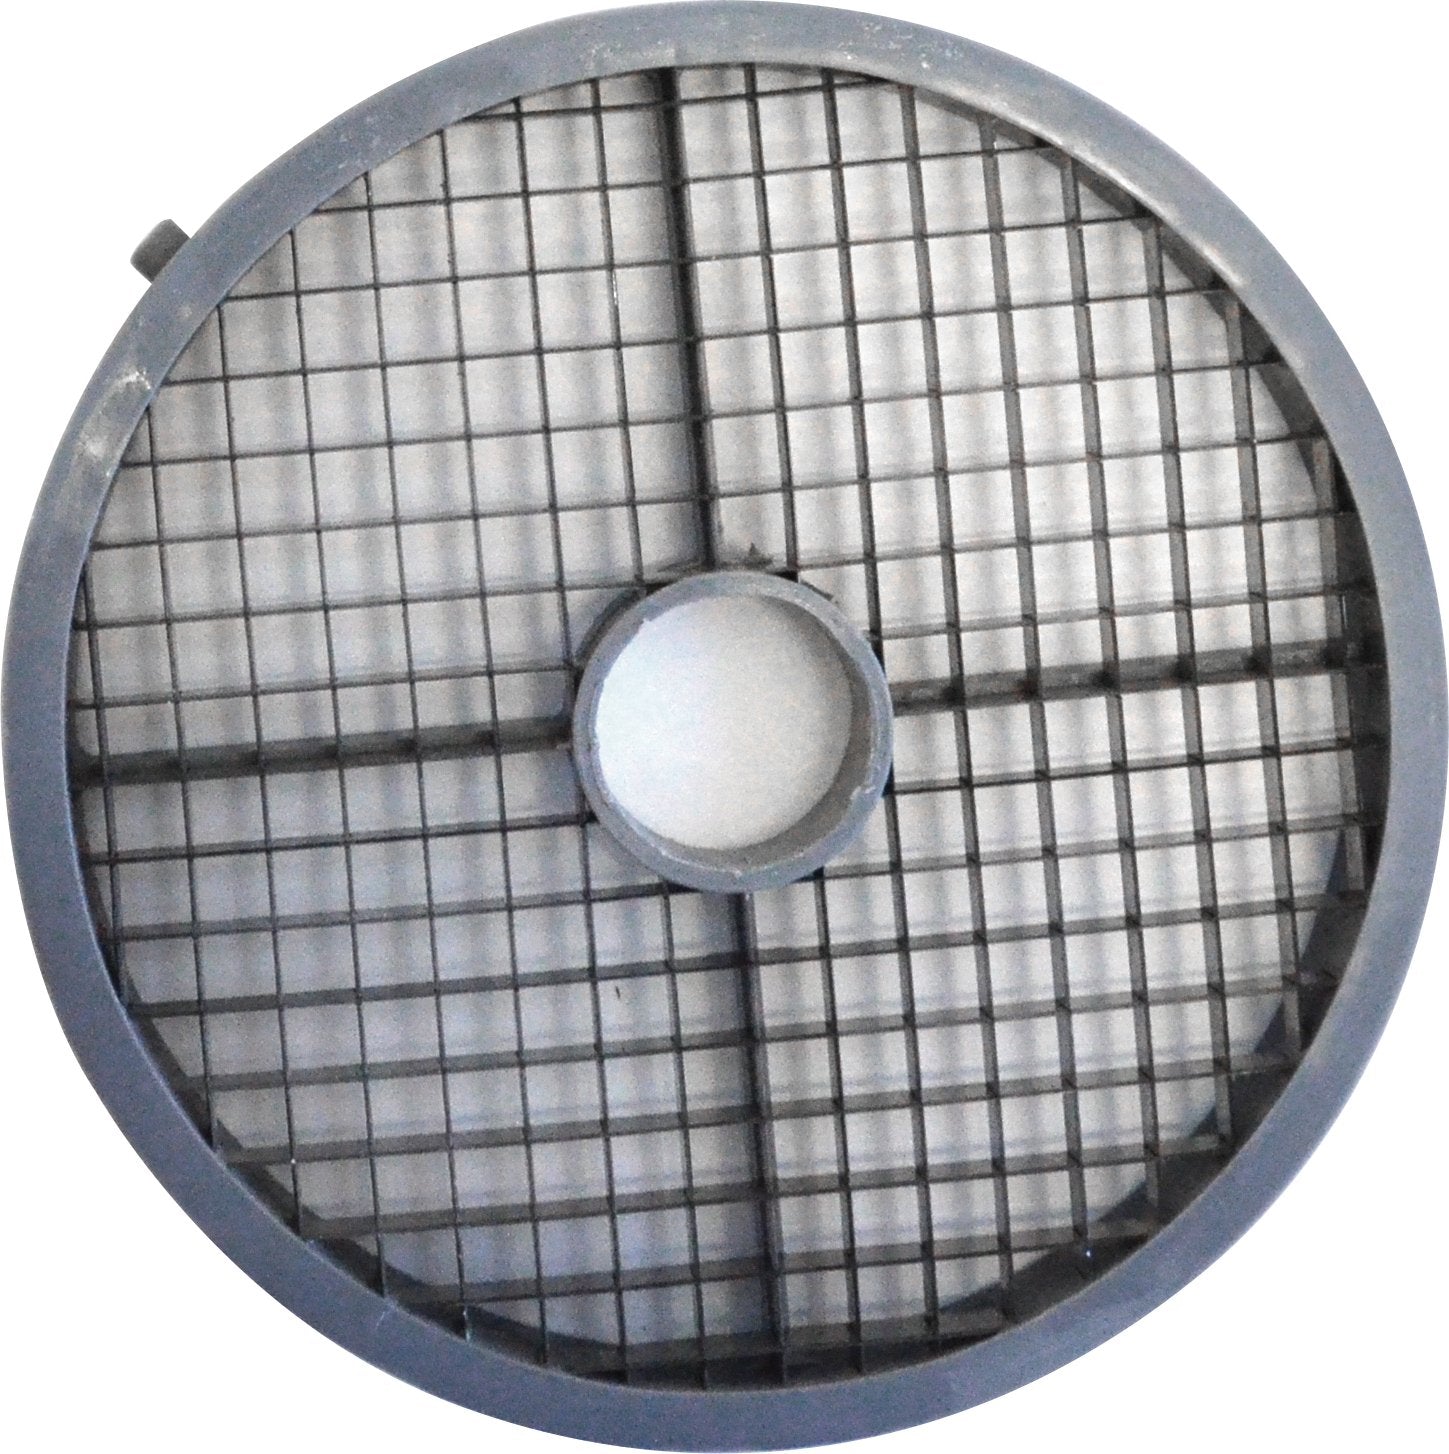 Omcan - 8 mm Cubing/Dicing Disc For Food Processor 19475 - 22344